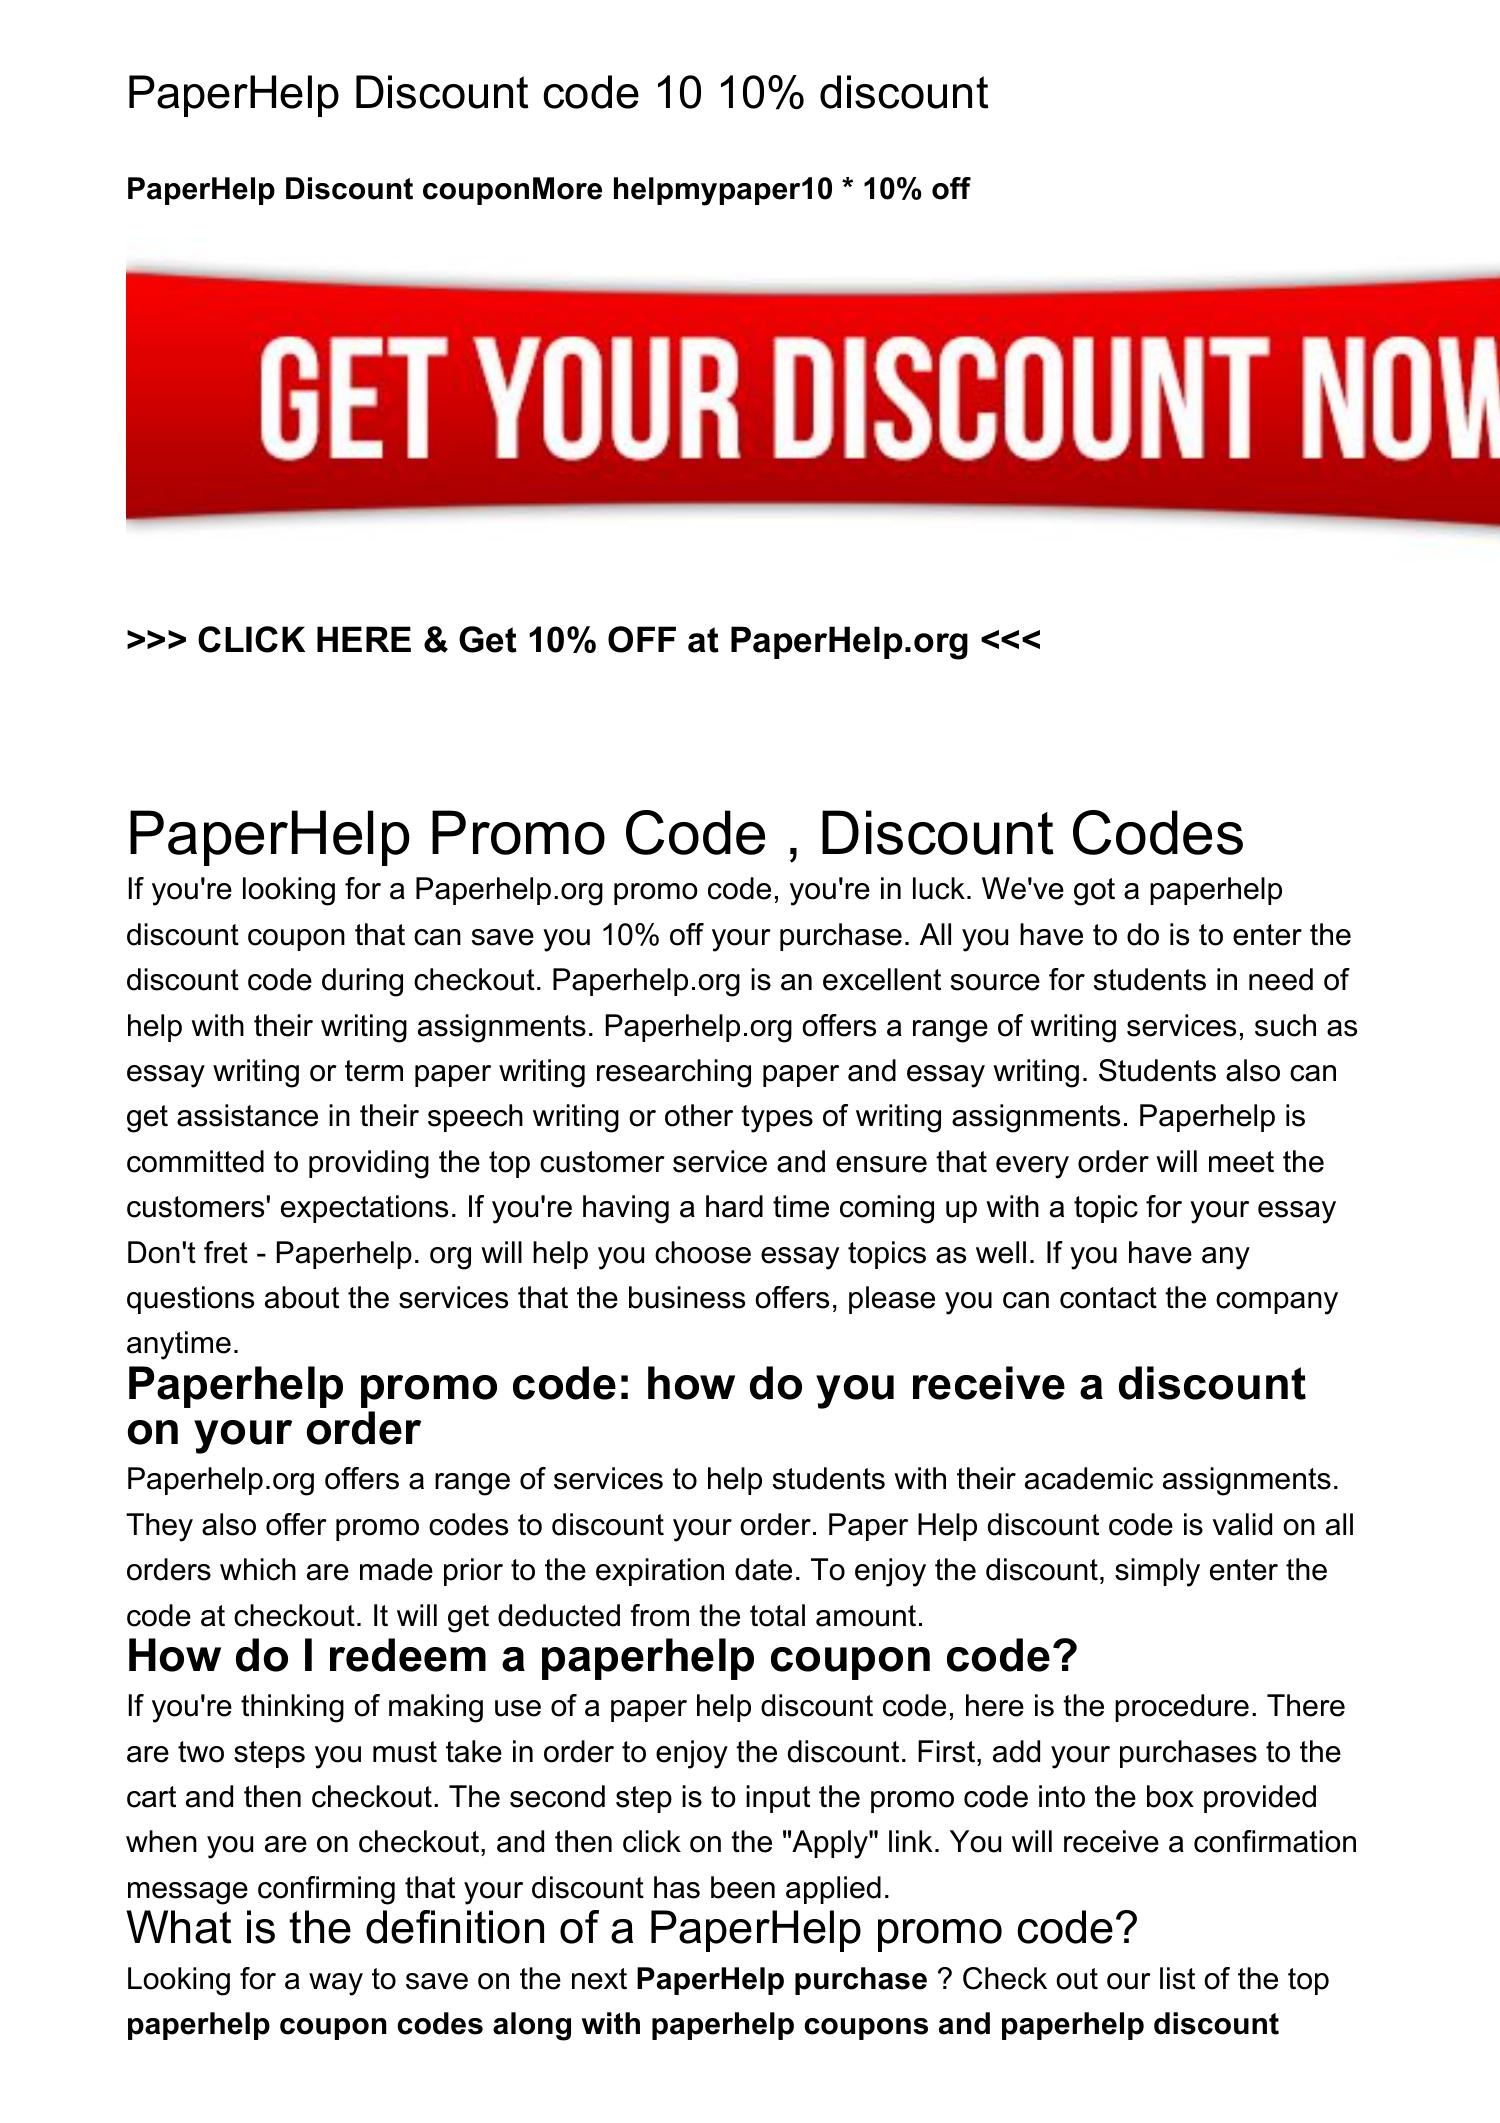 paperhelp-discount-coupon-code-10-10-offuhmdmpdf-pdf.jpg